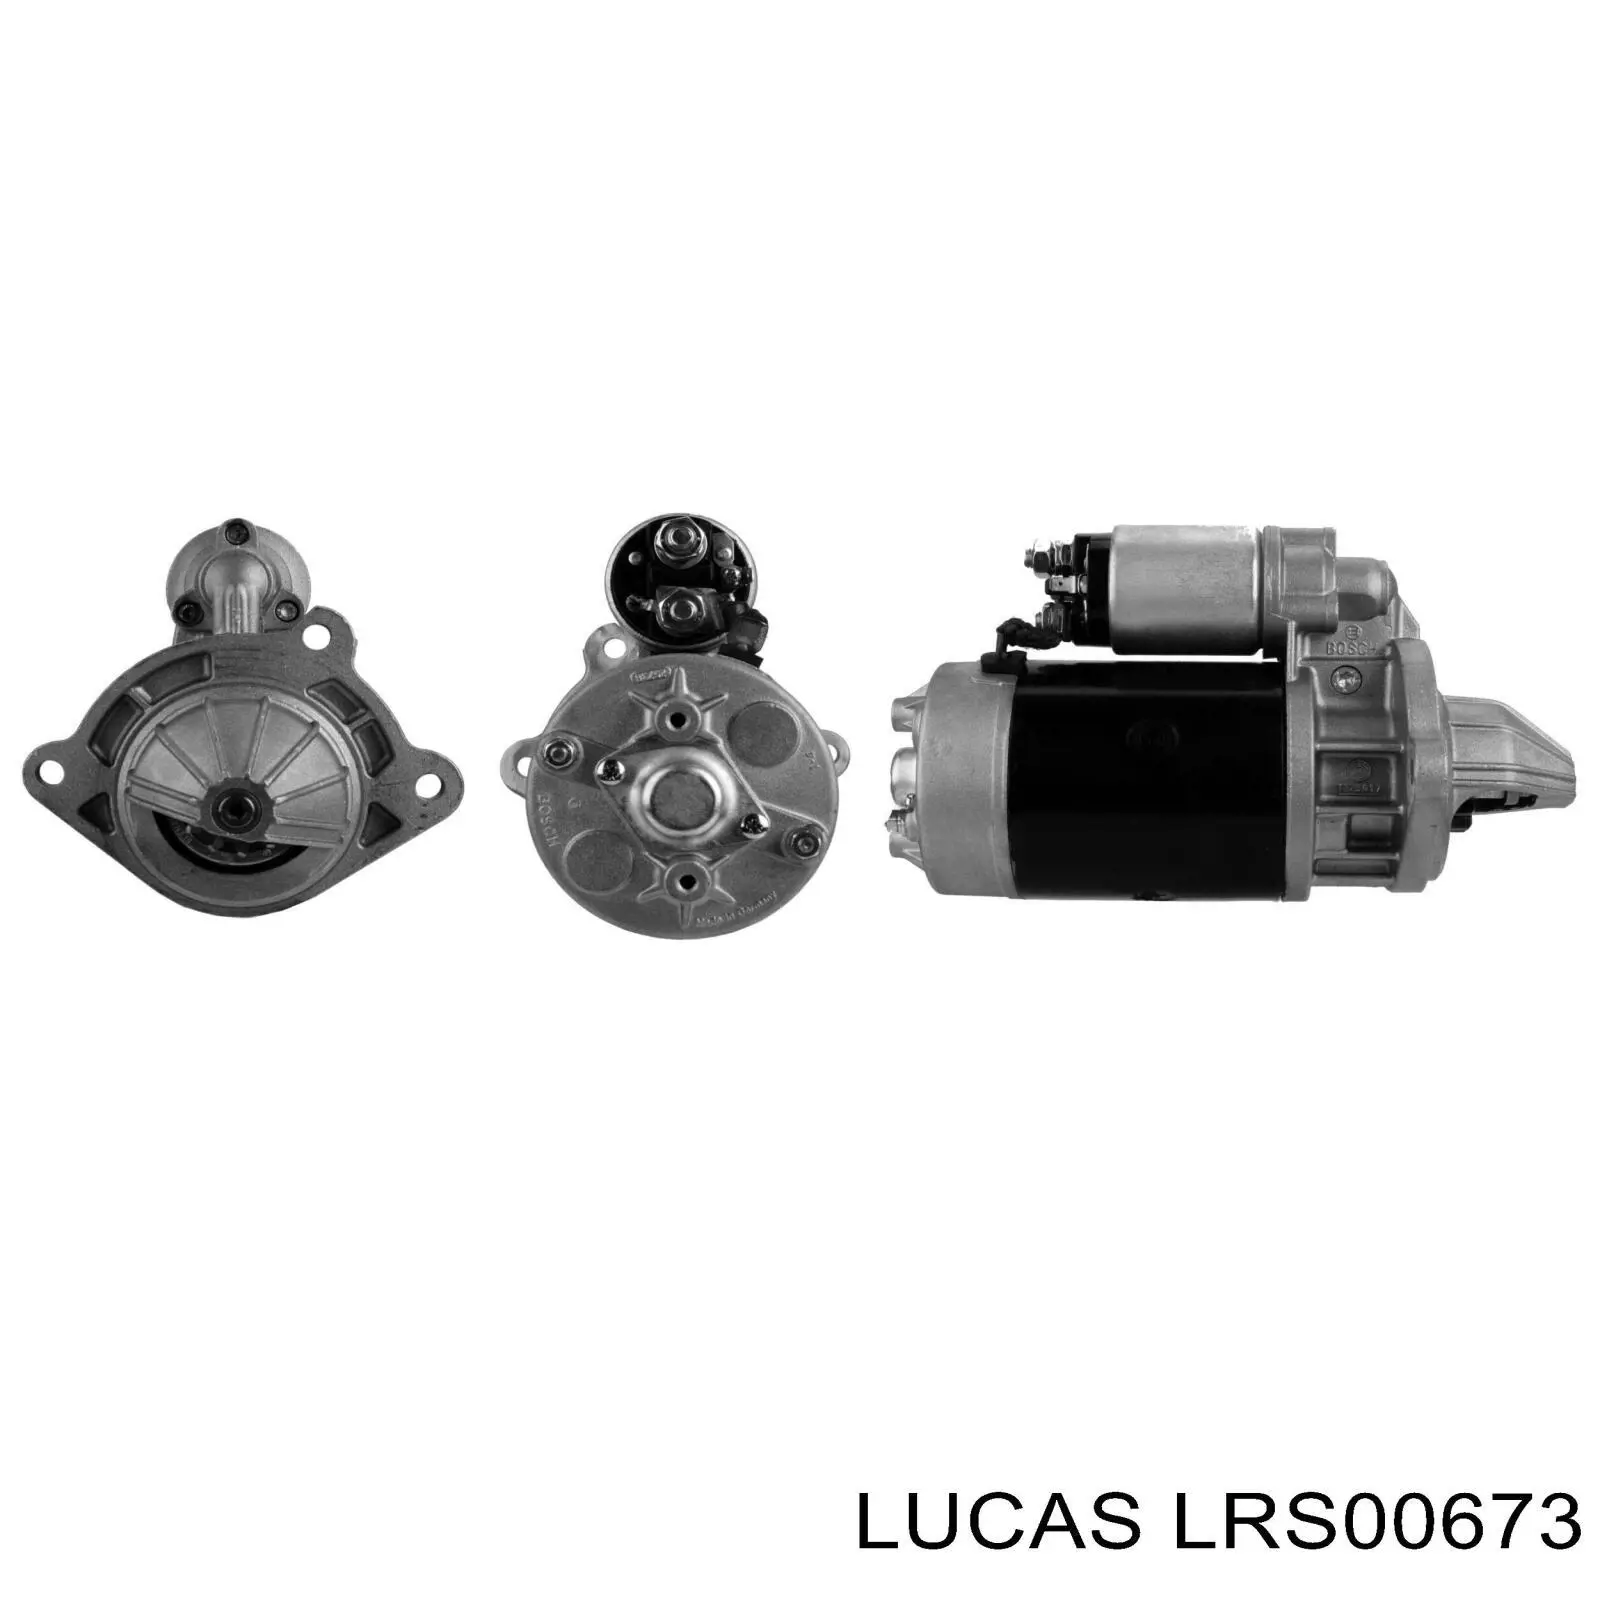 LRS00673 Lucas motor de arranque